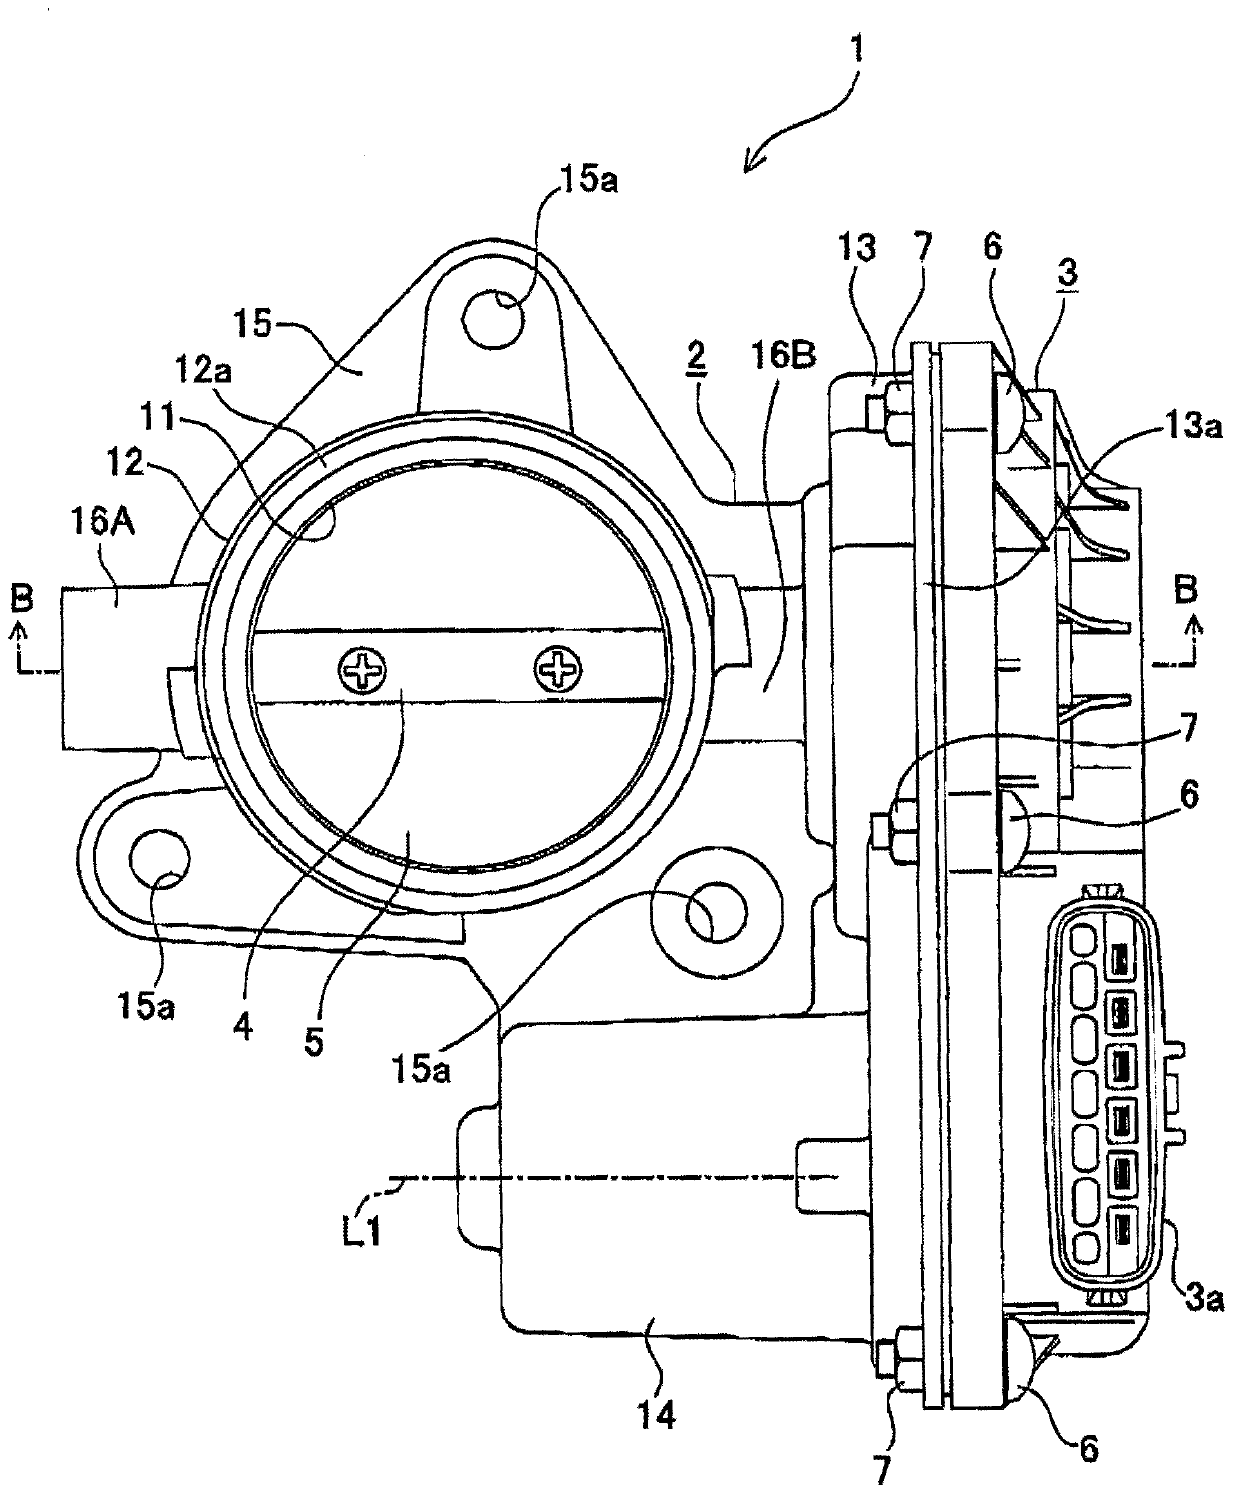 Throttle valve device